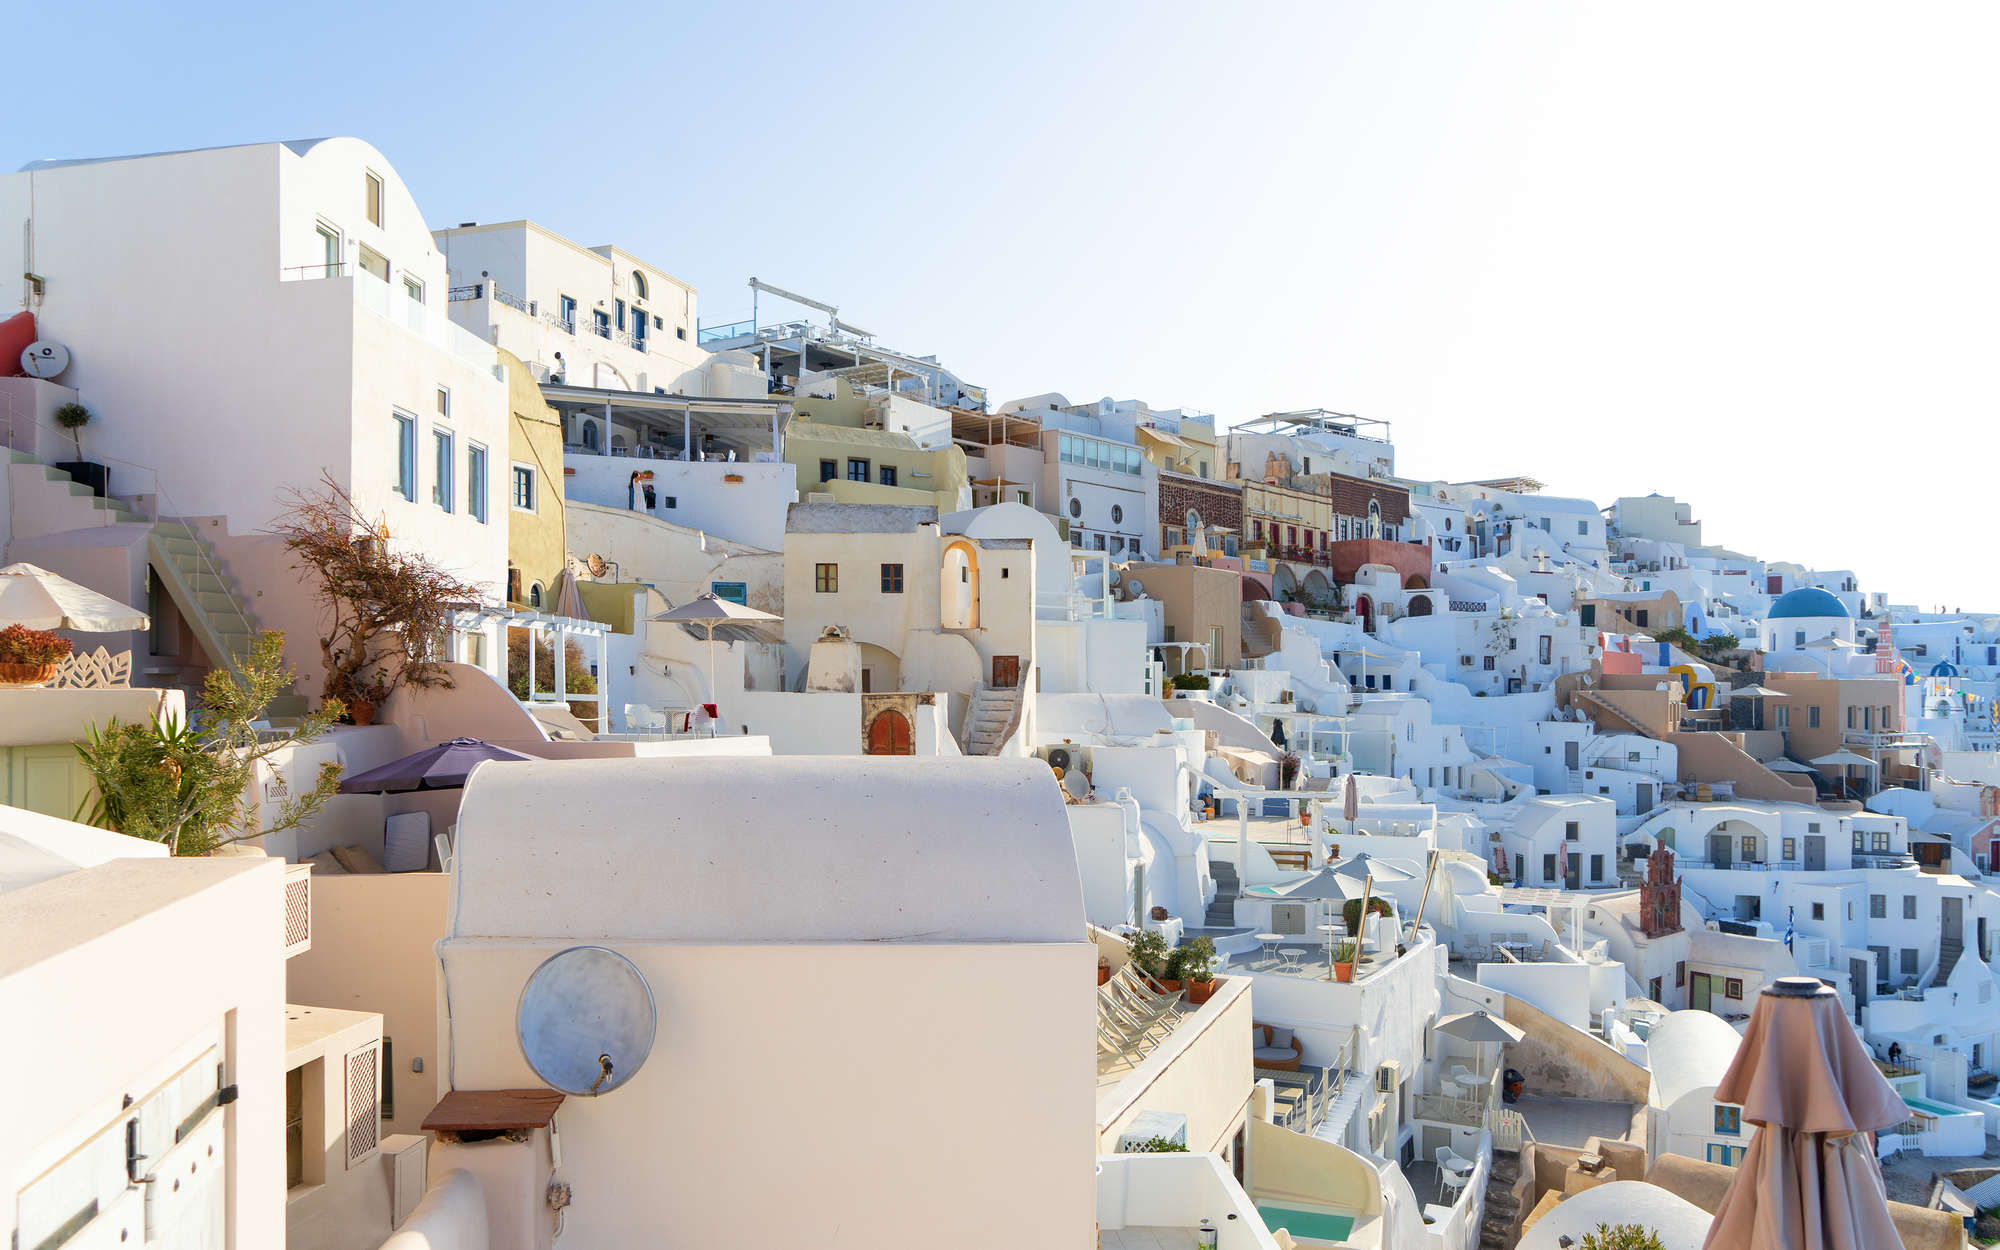             Fototapete Santorini in der Mittagssonne – Premium Glattvlies
        